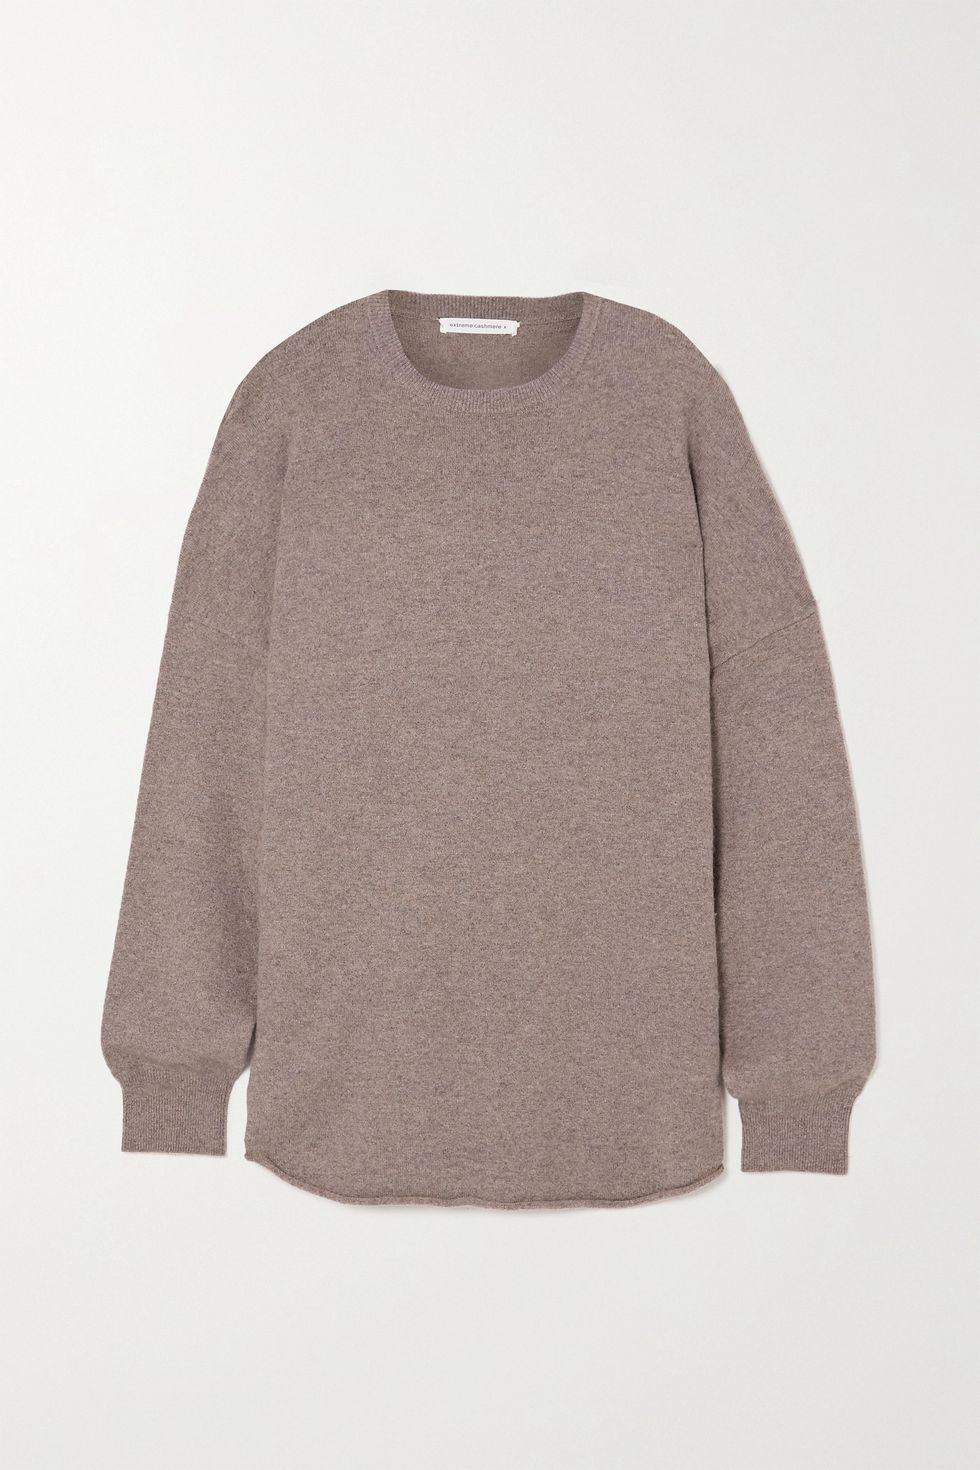 N°53 Crew Hop cashmere-blend sweater